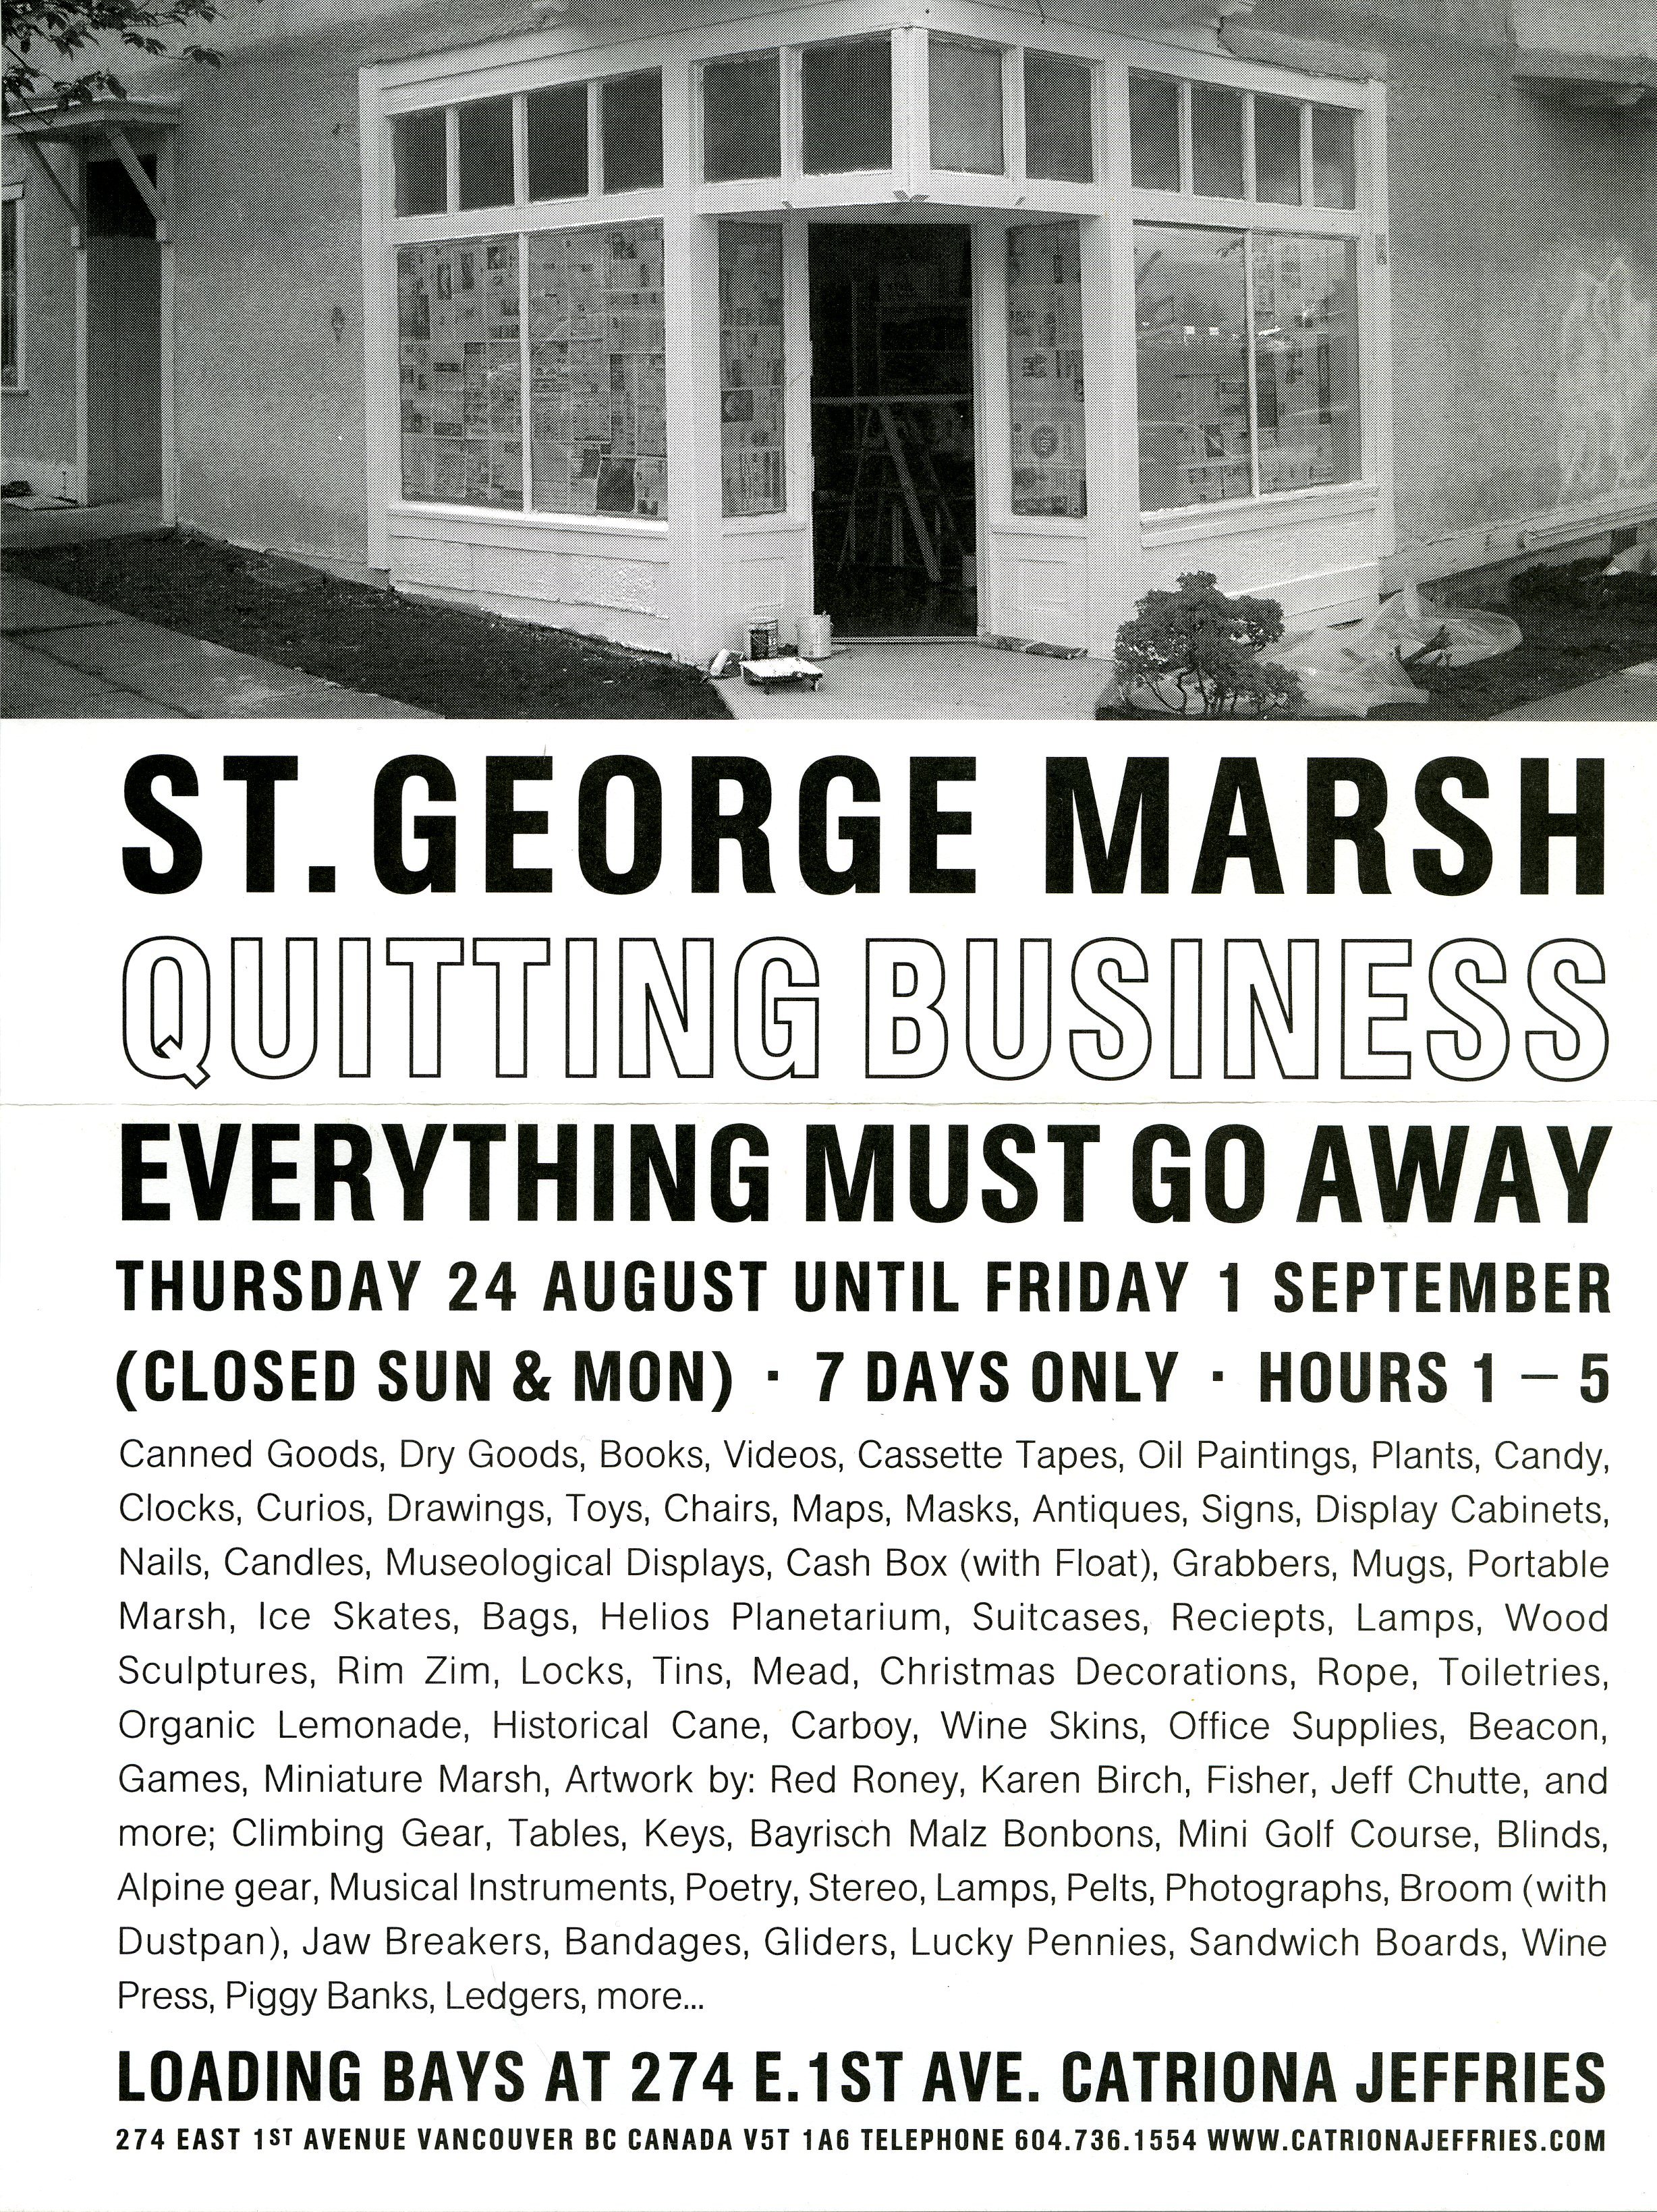 Moore_Gleeson_St-George-Marsh_CJ_2006_poster.jpg#asset:12383